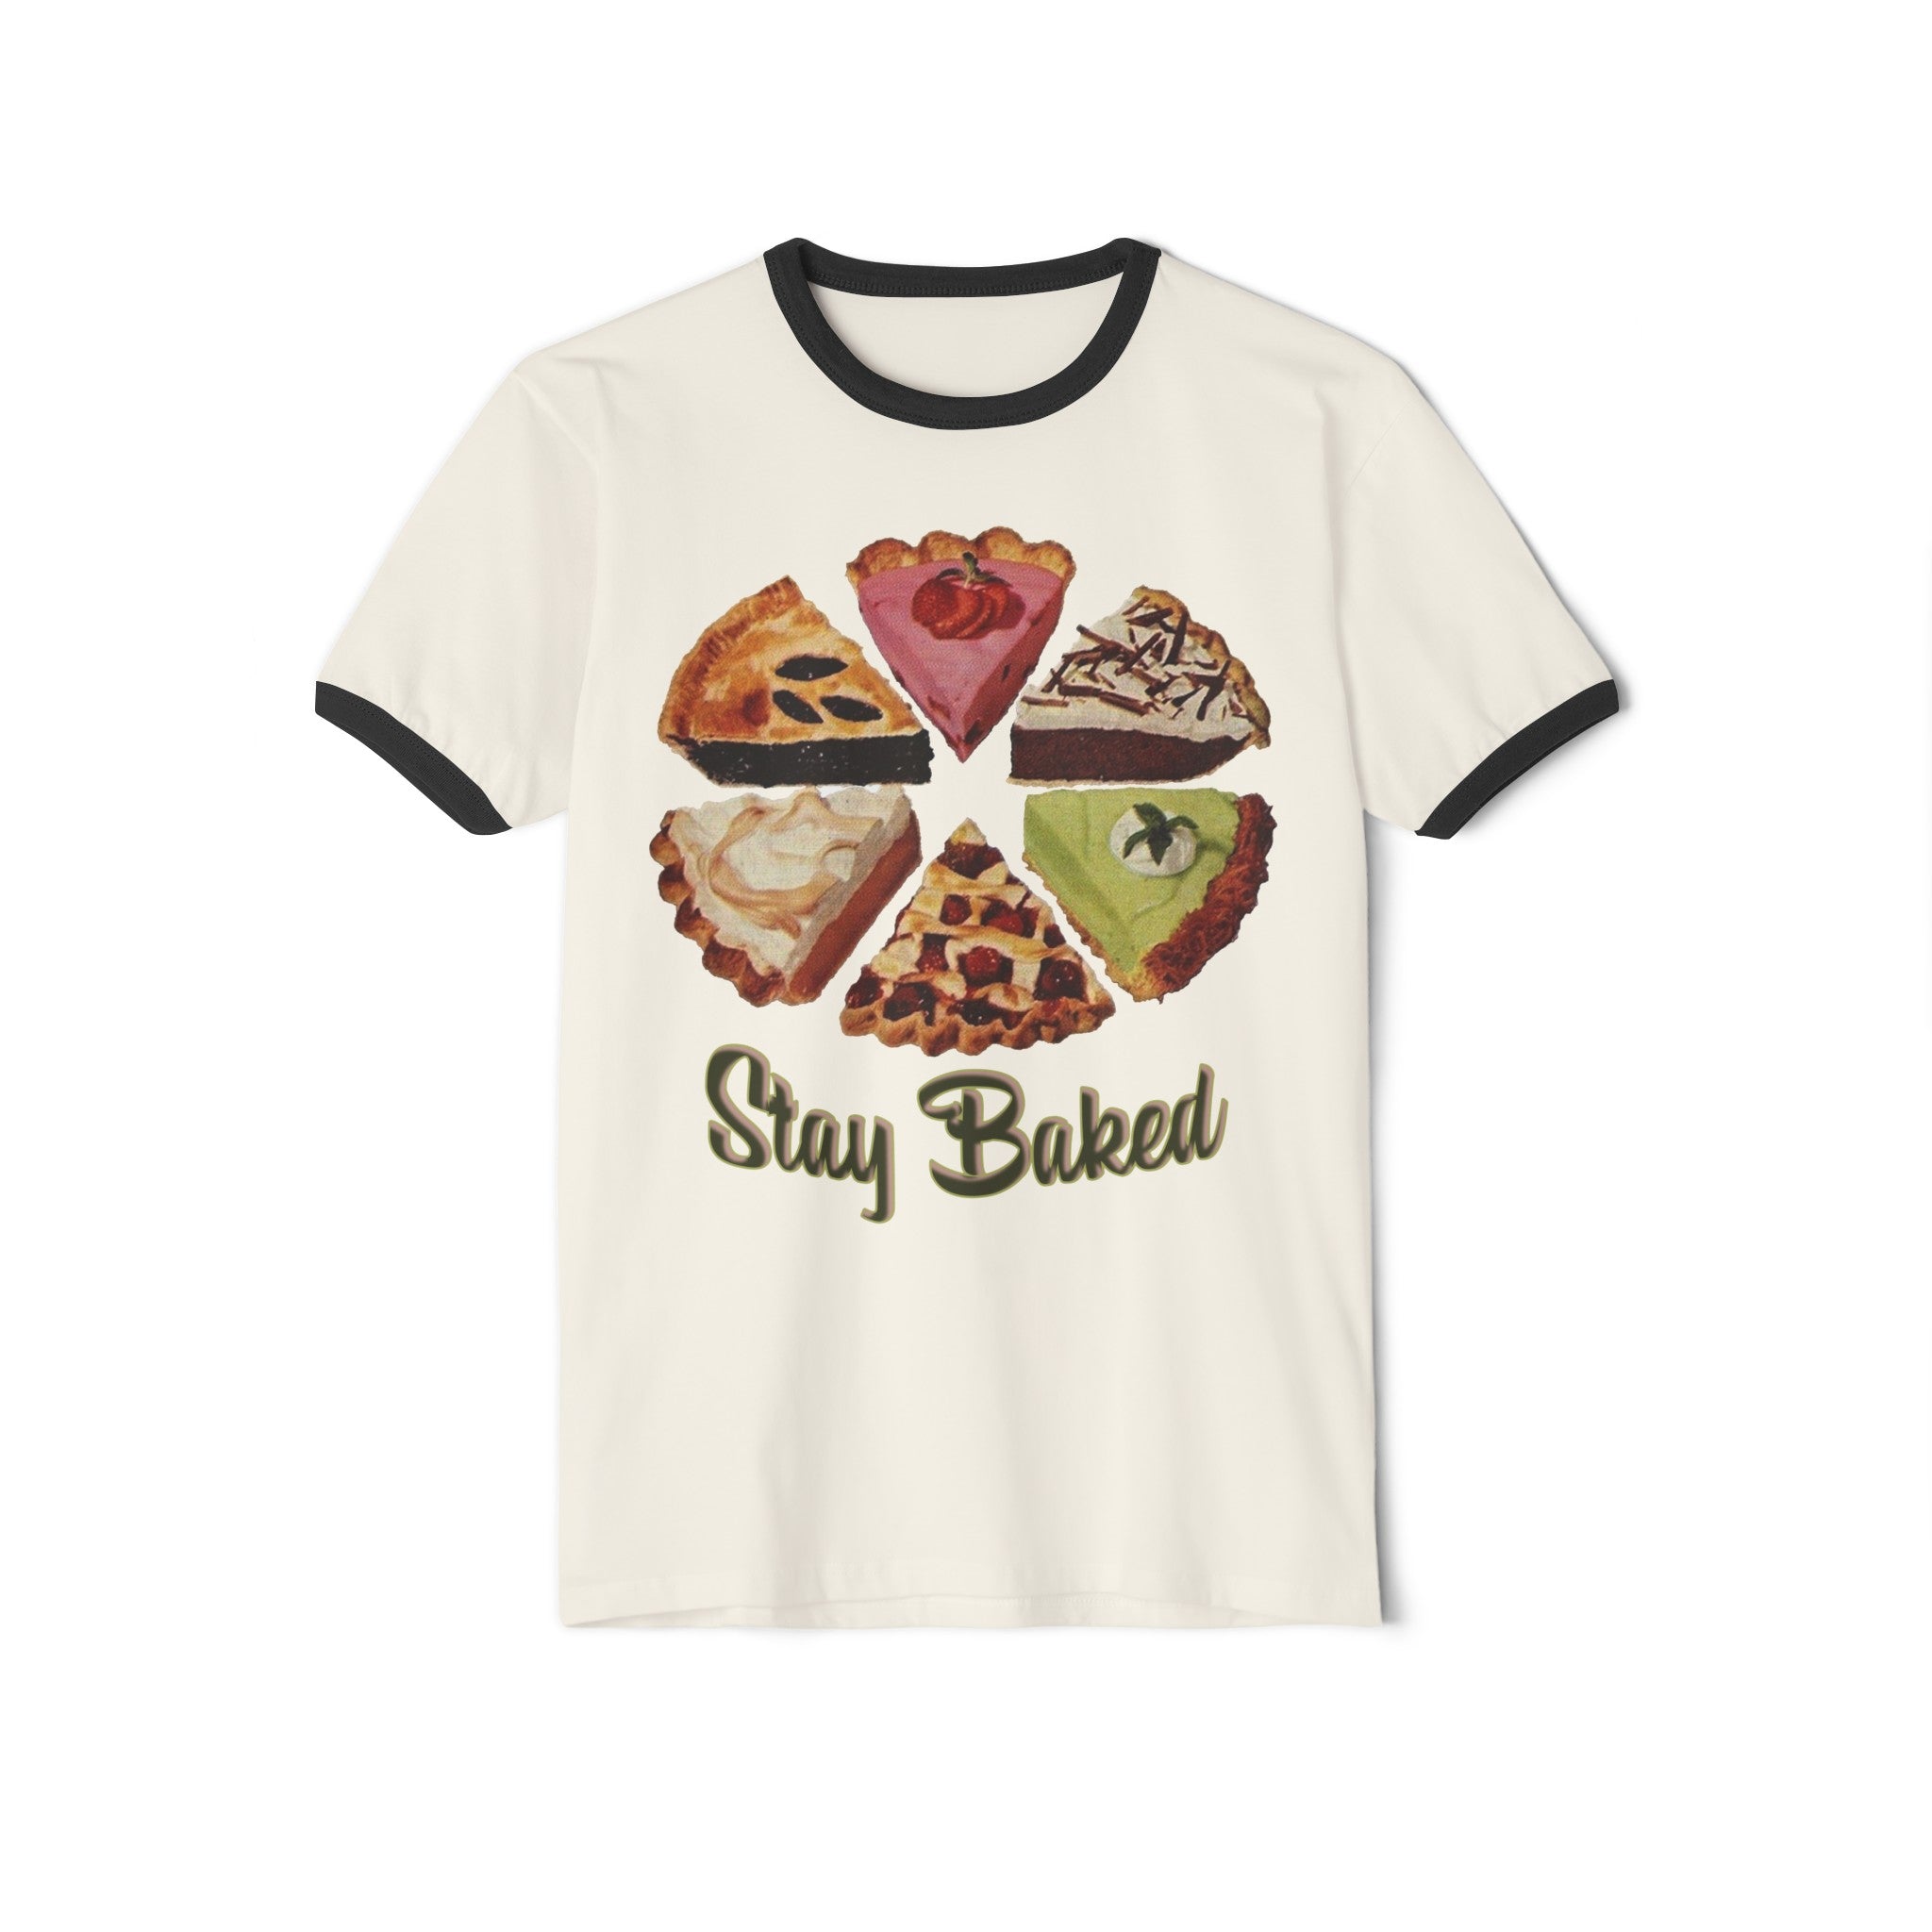 Stay Baked Pie Unisex Cotton Ringer T-Shirt